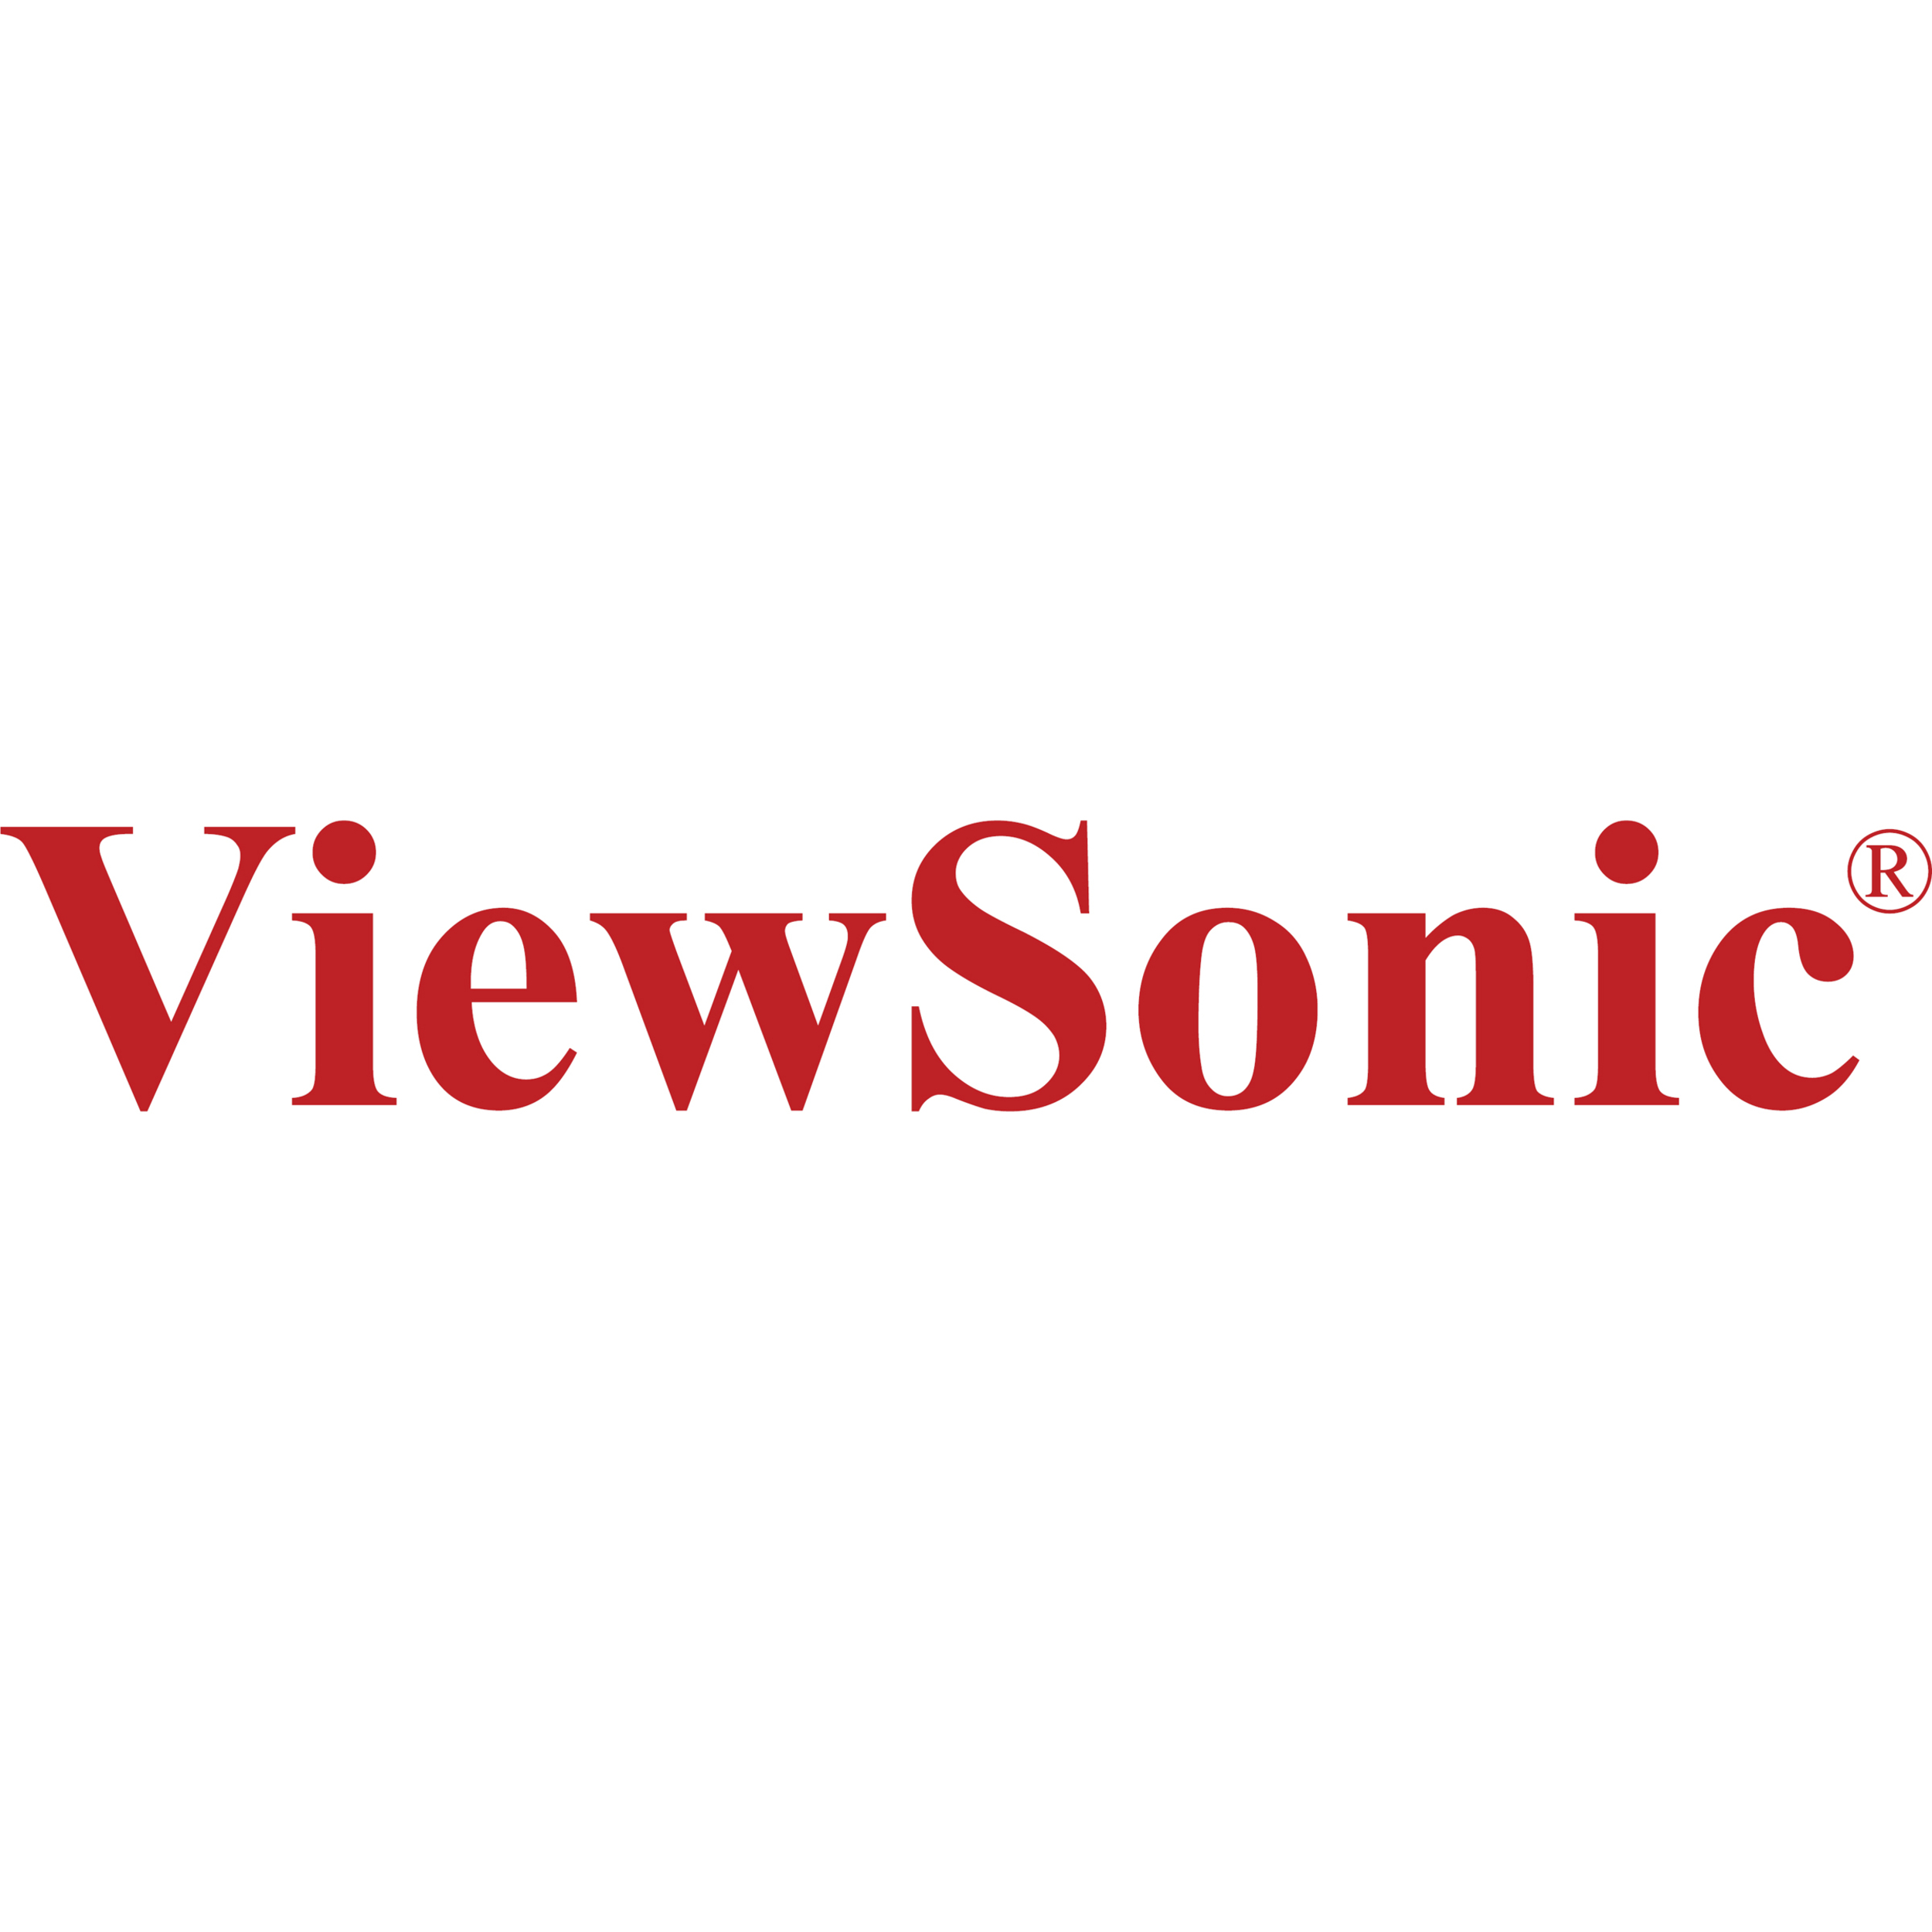 Viewsonic VX2457-mhd 24" Full HD LED LCD Monitor - 16:9 - Black_subImage_1